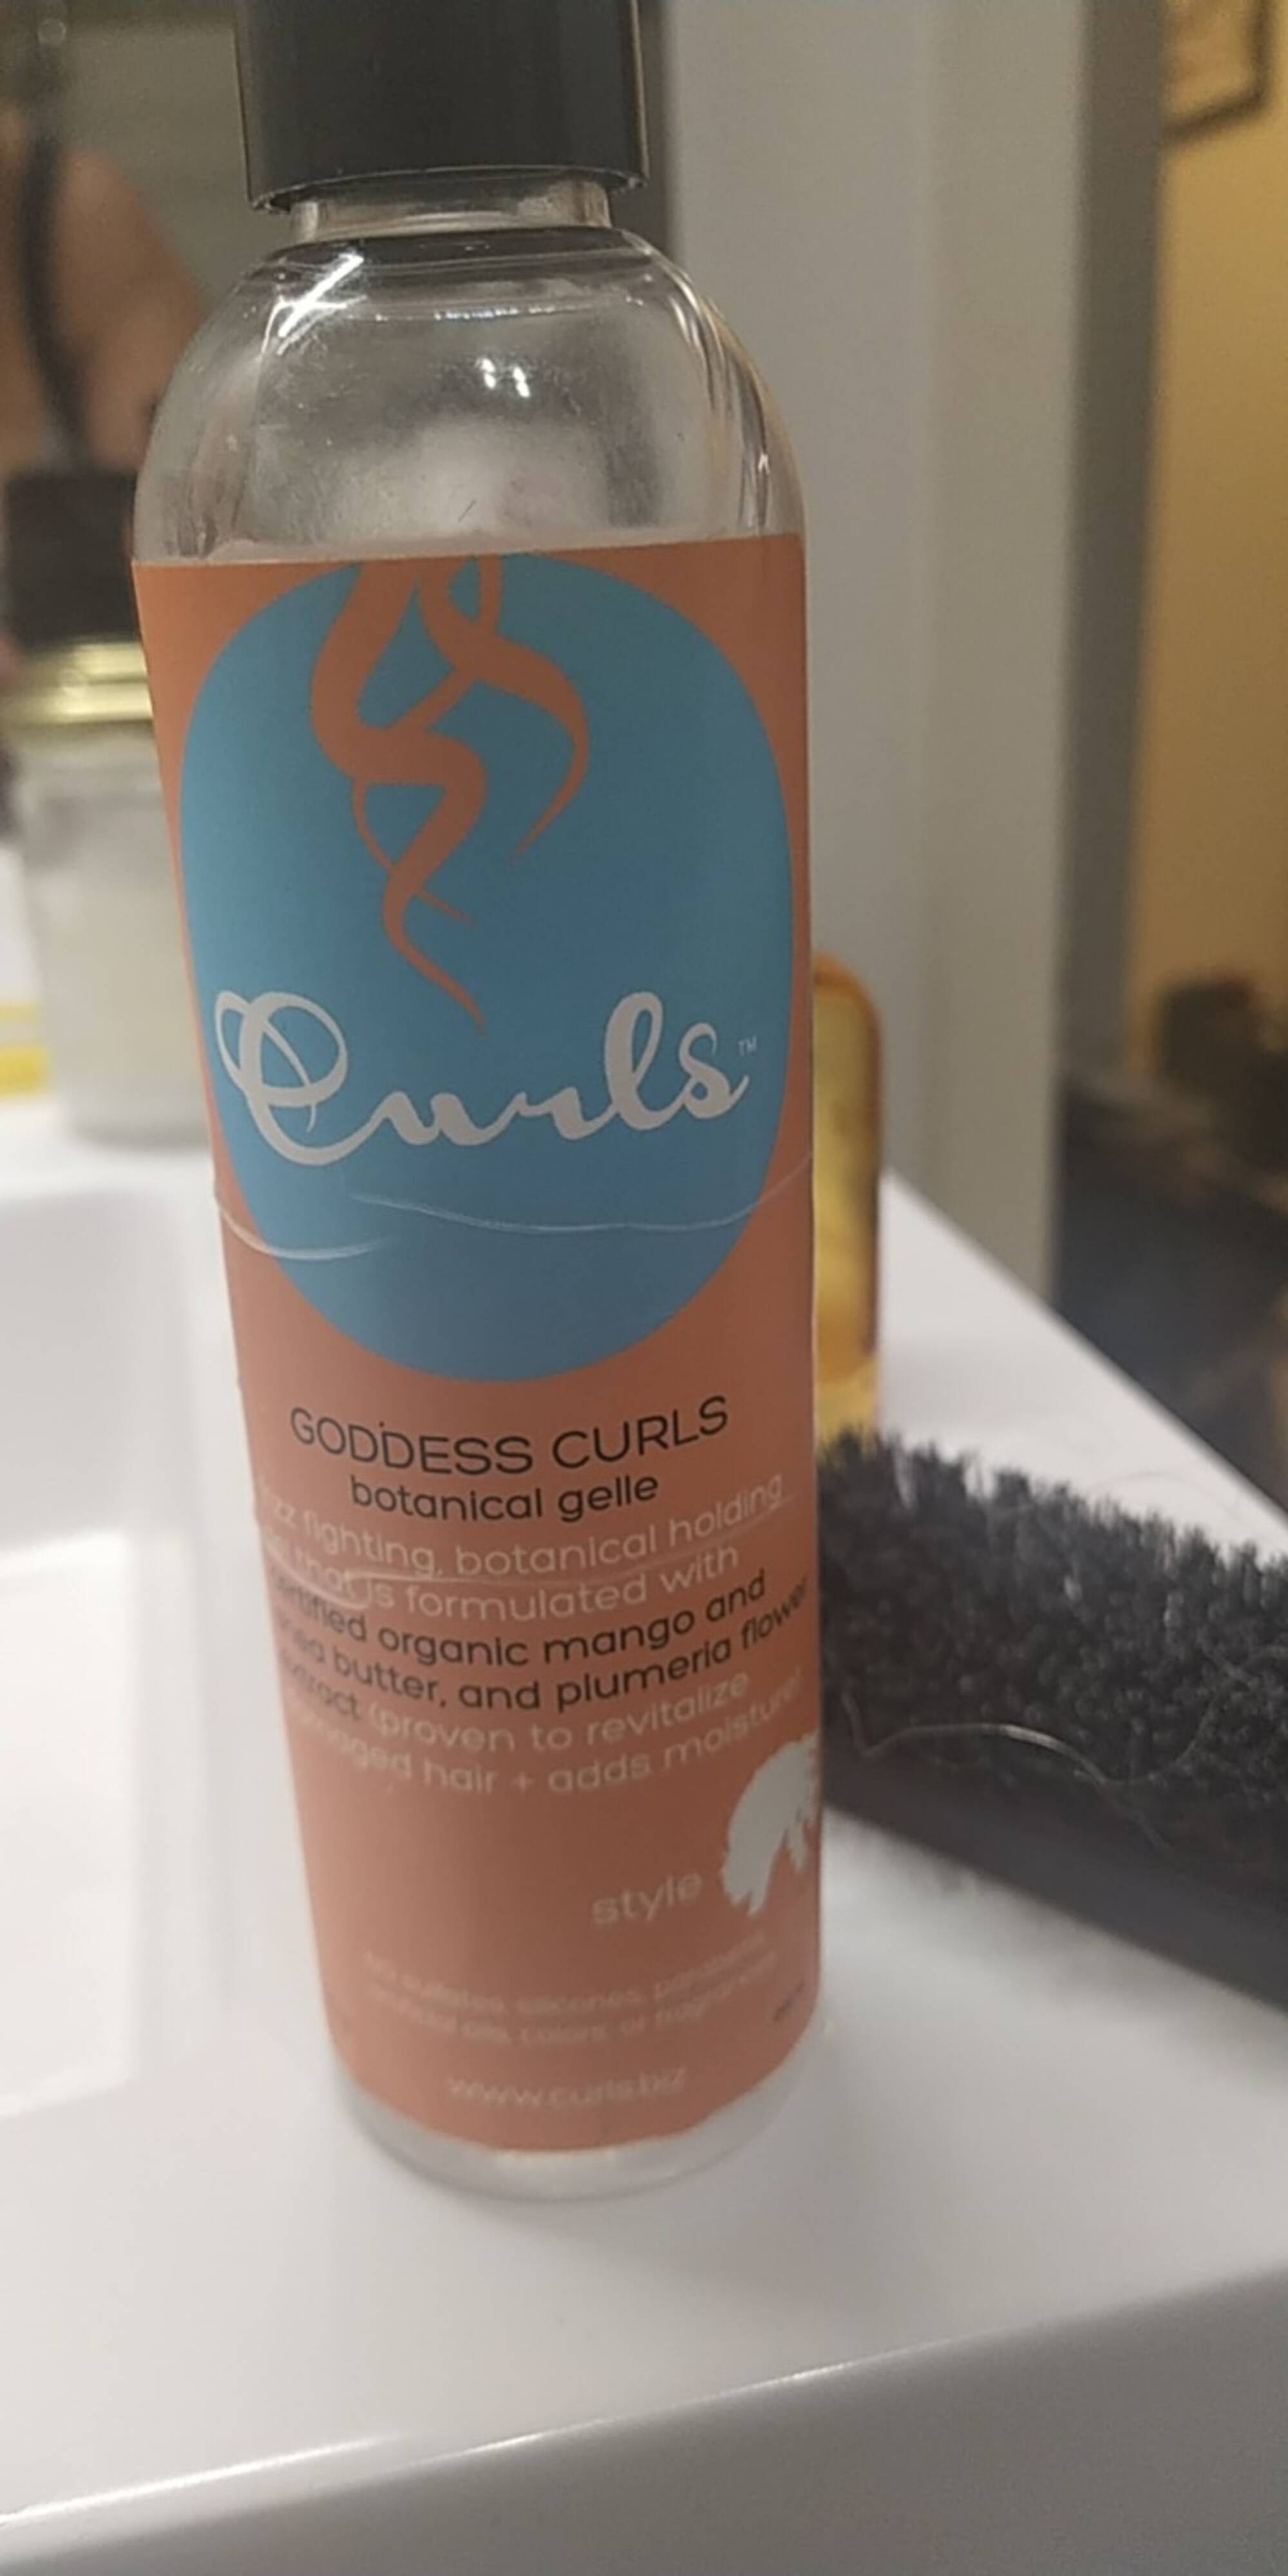 CURLS - Goddess curls botanical gelle